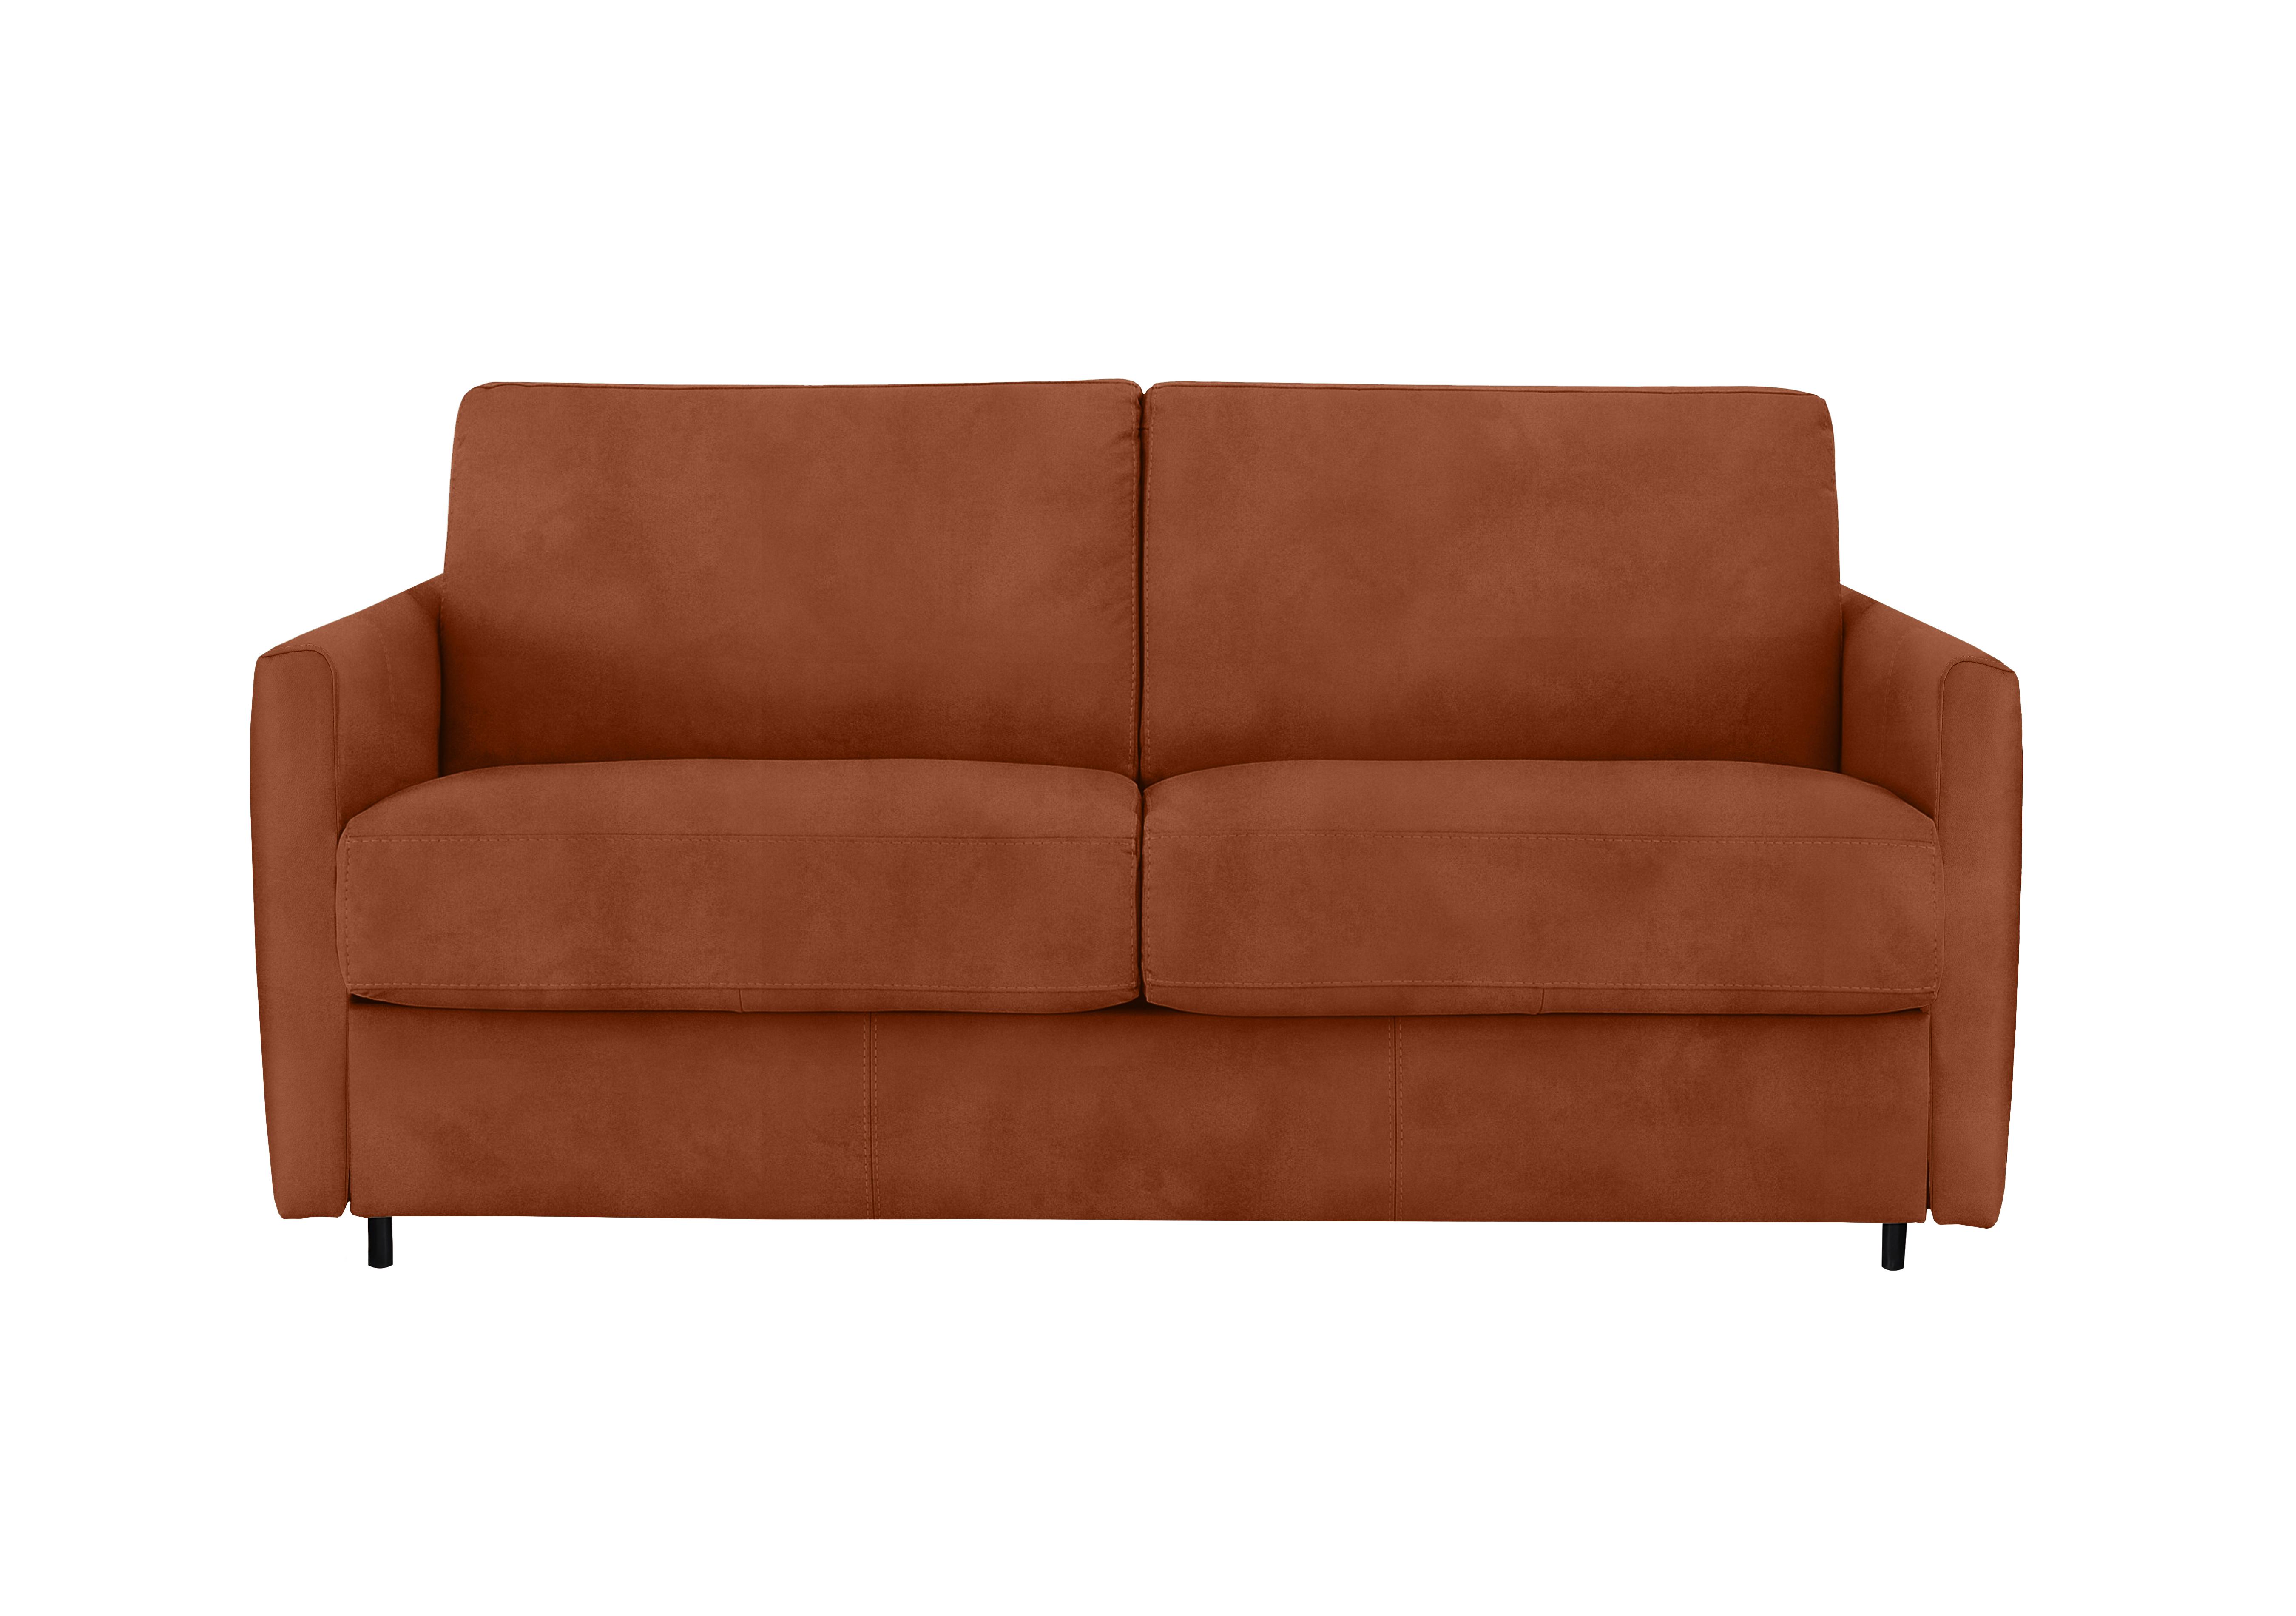 Alcova 2.5 Seater Fabric Sofa Bed with Slim Arms in Selma Mattone on Furniture Village